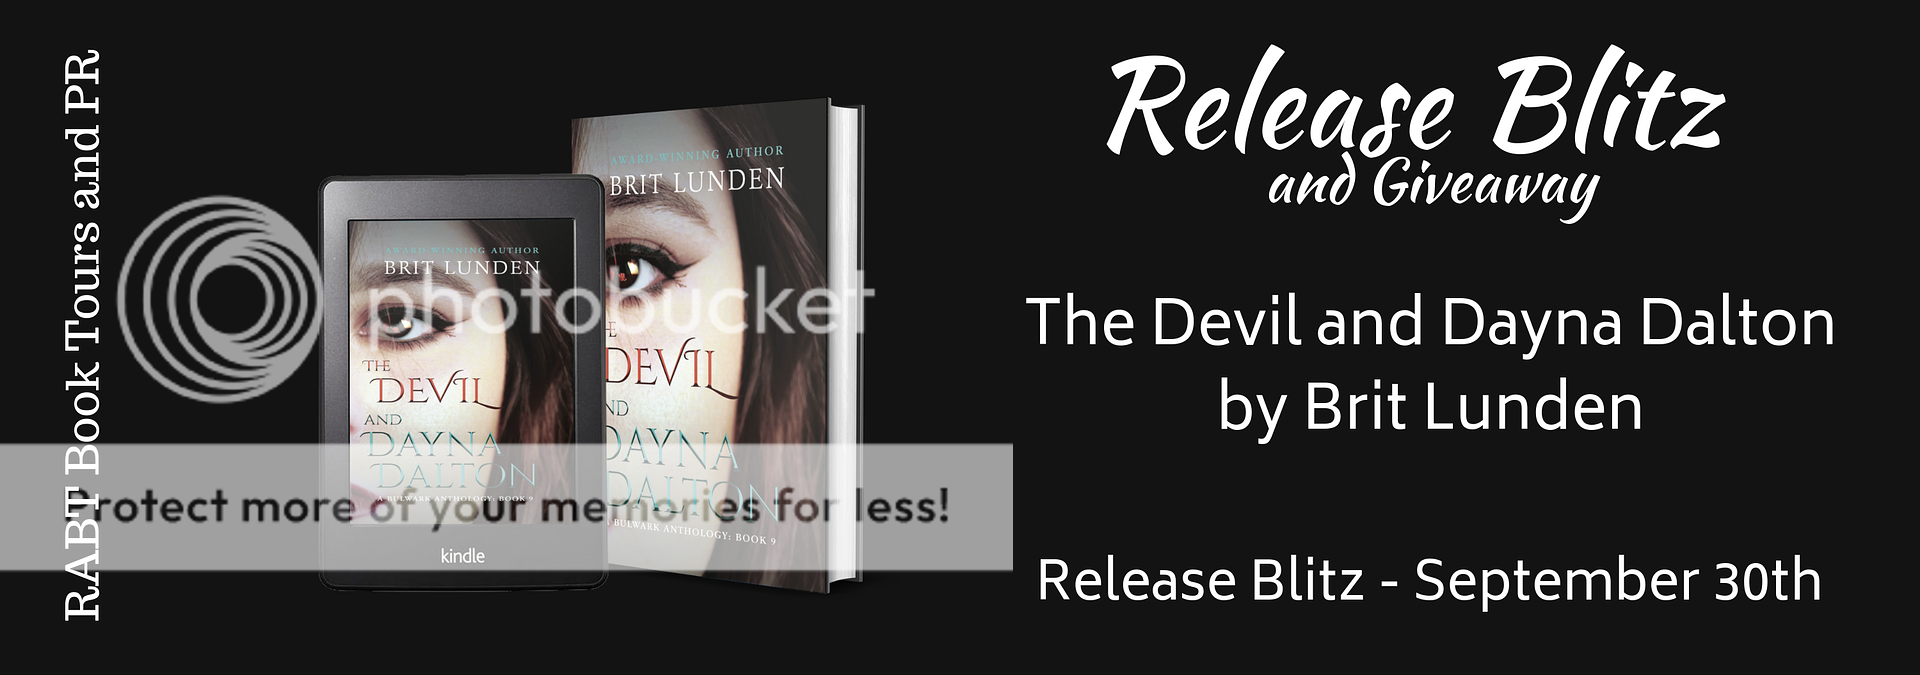 Release Blitz: The Devil & Dayna Dalton by @BritLunden #releaseday #availablenow #excerpt #giveaway #paranormal #romance #pnr @RABTBookTours 